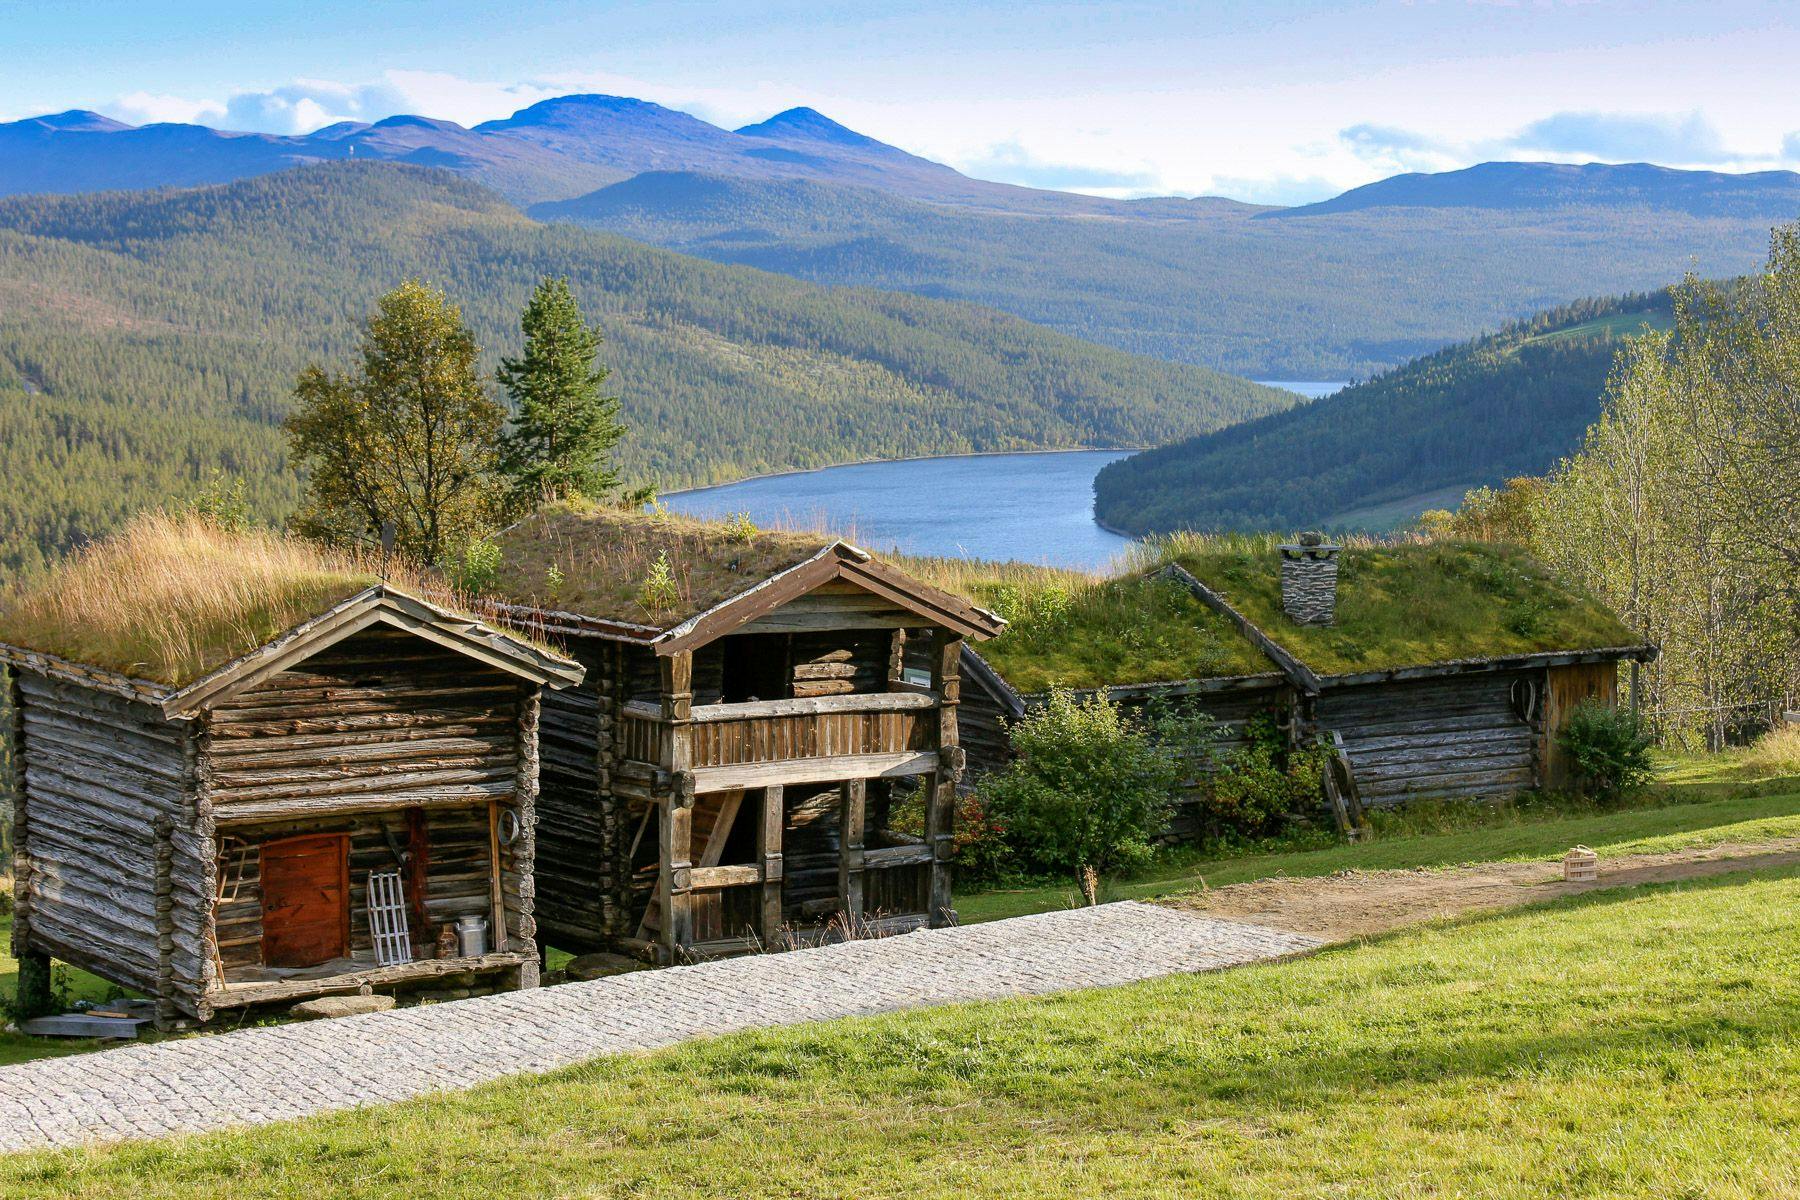 Skåbu Mountain Lodge